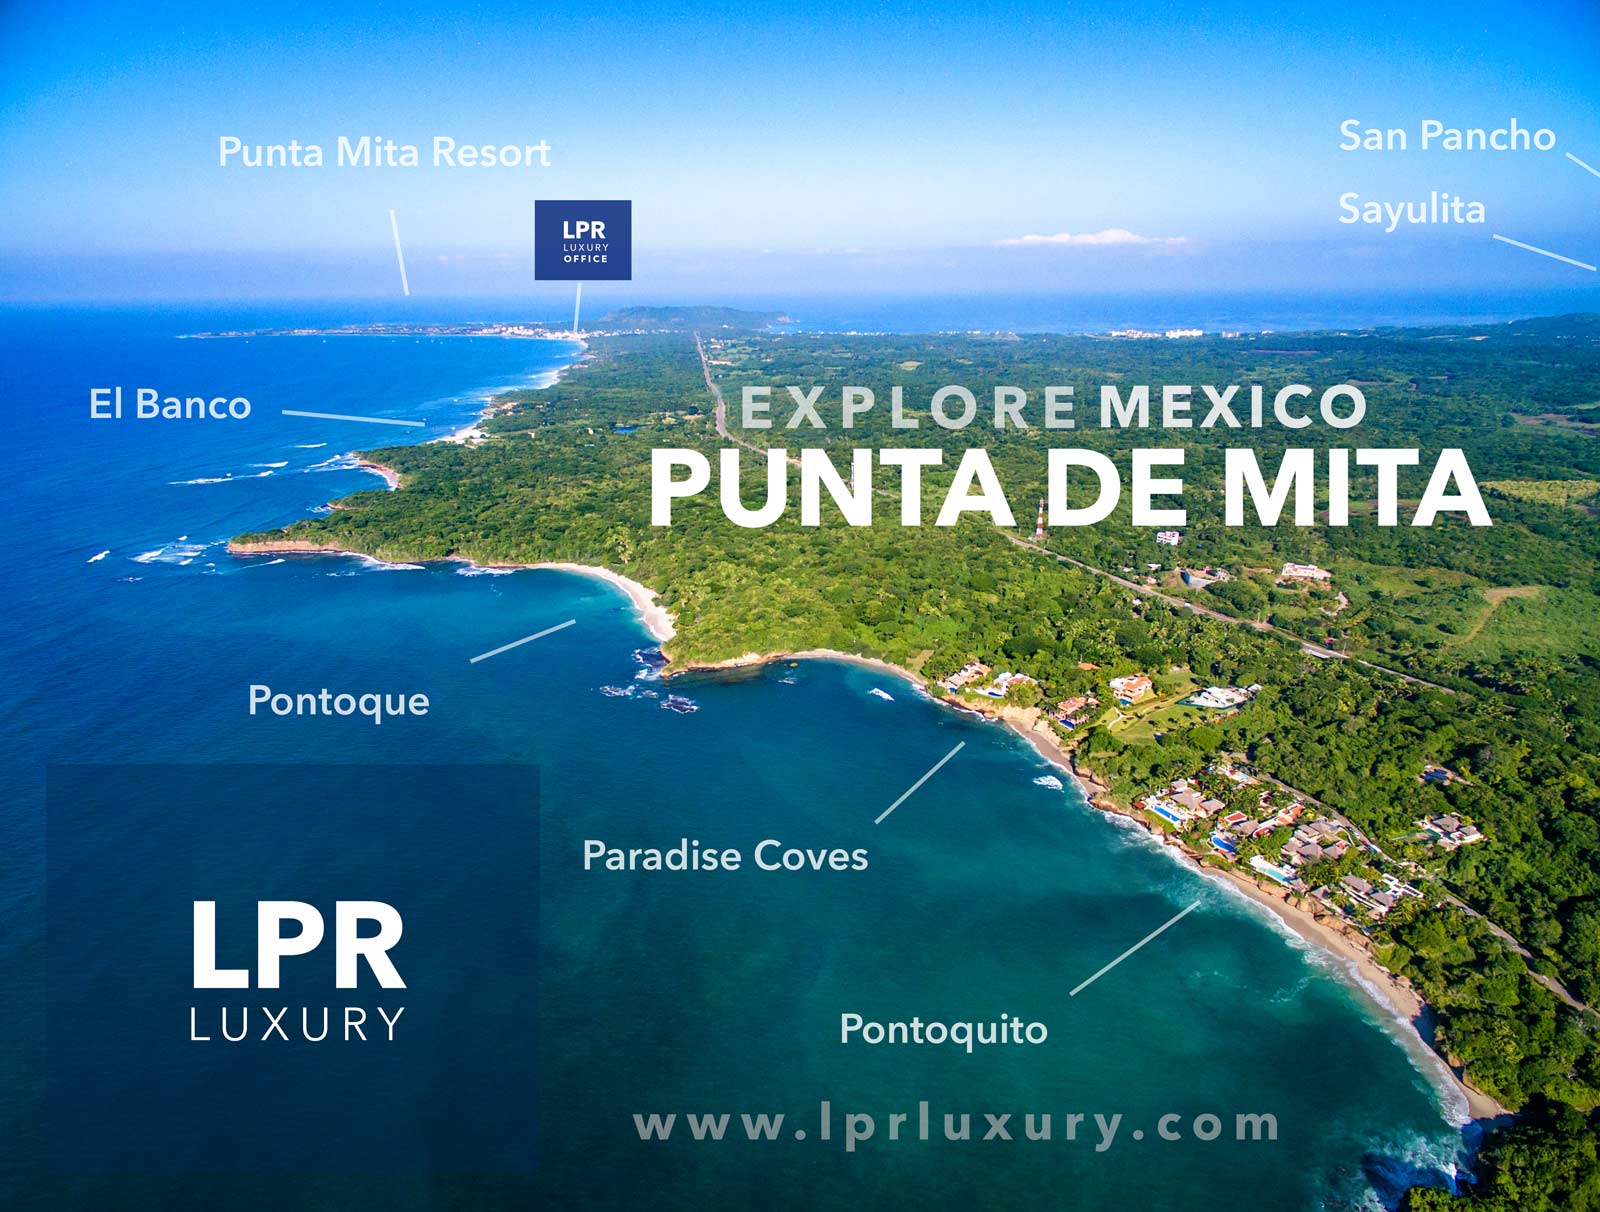 Explore for your dream home building lot with LPR Luxury. Land, luxury, leisure...Punta de Mita | Puerto Vallarta - Riviera Nayarit, Mexico